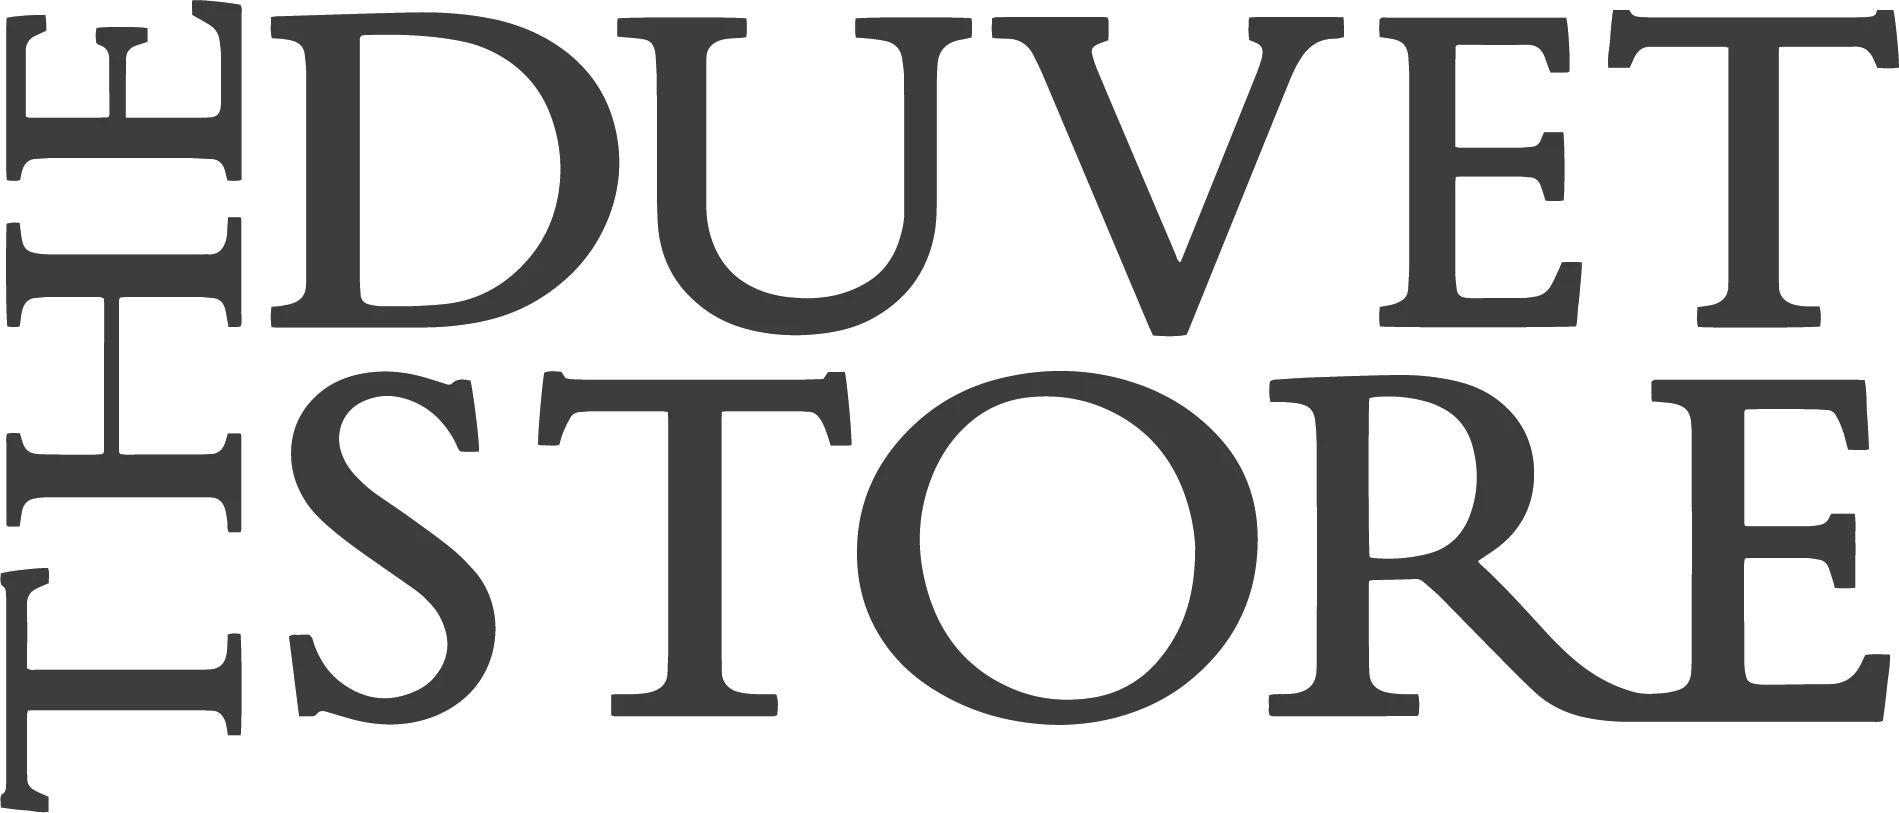  The Duvet Store Voucher Code